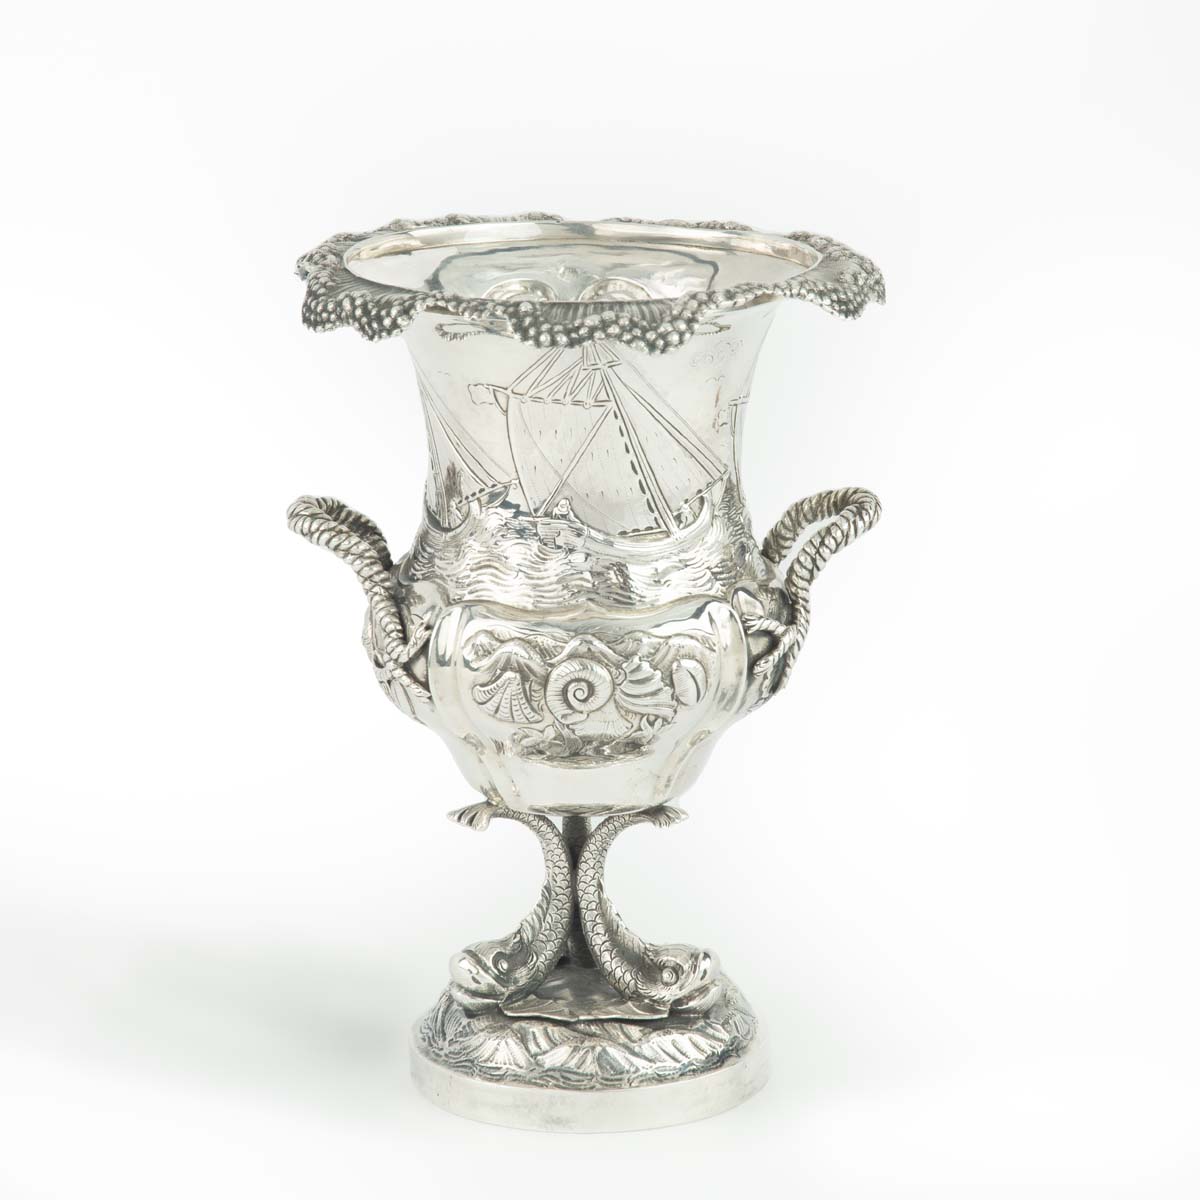 The Luska Bay Regatta Challenge Cup won by Surprise, 1878